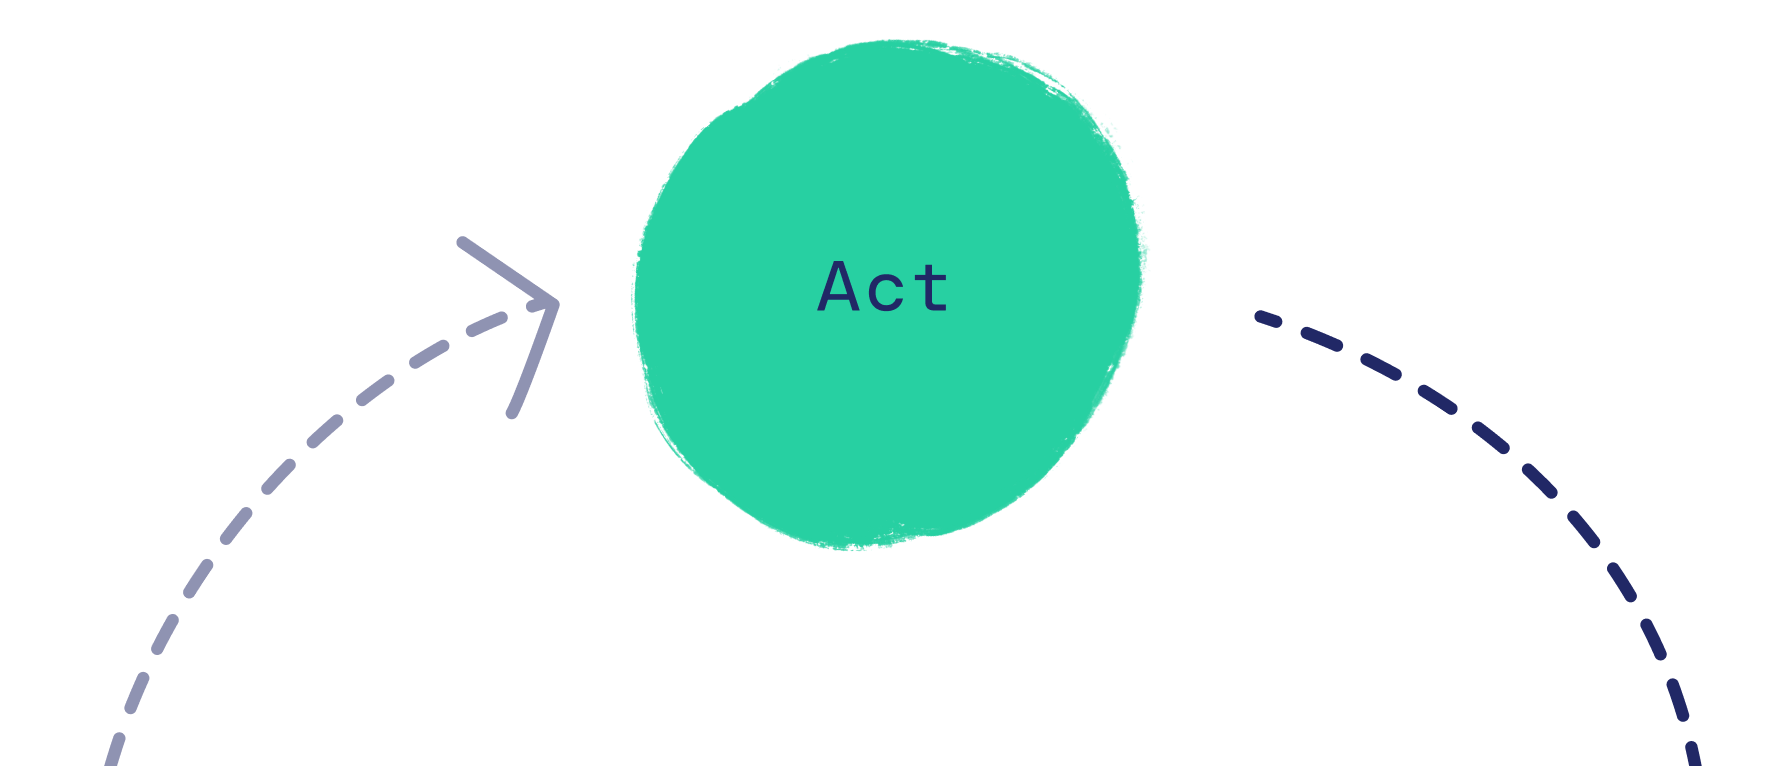 Act in green circle with circular arrows